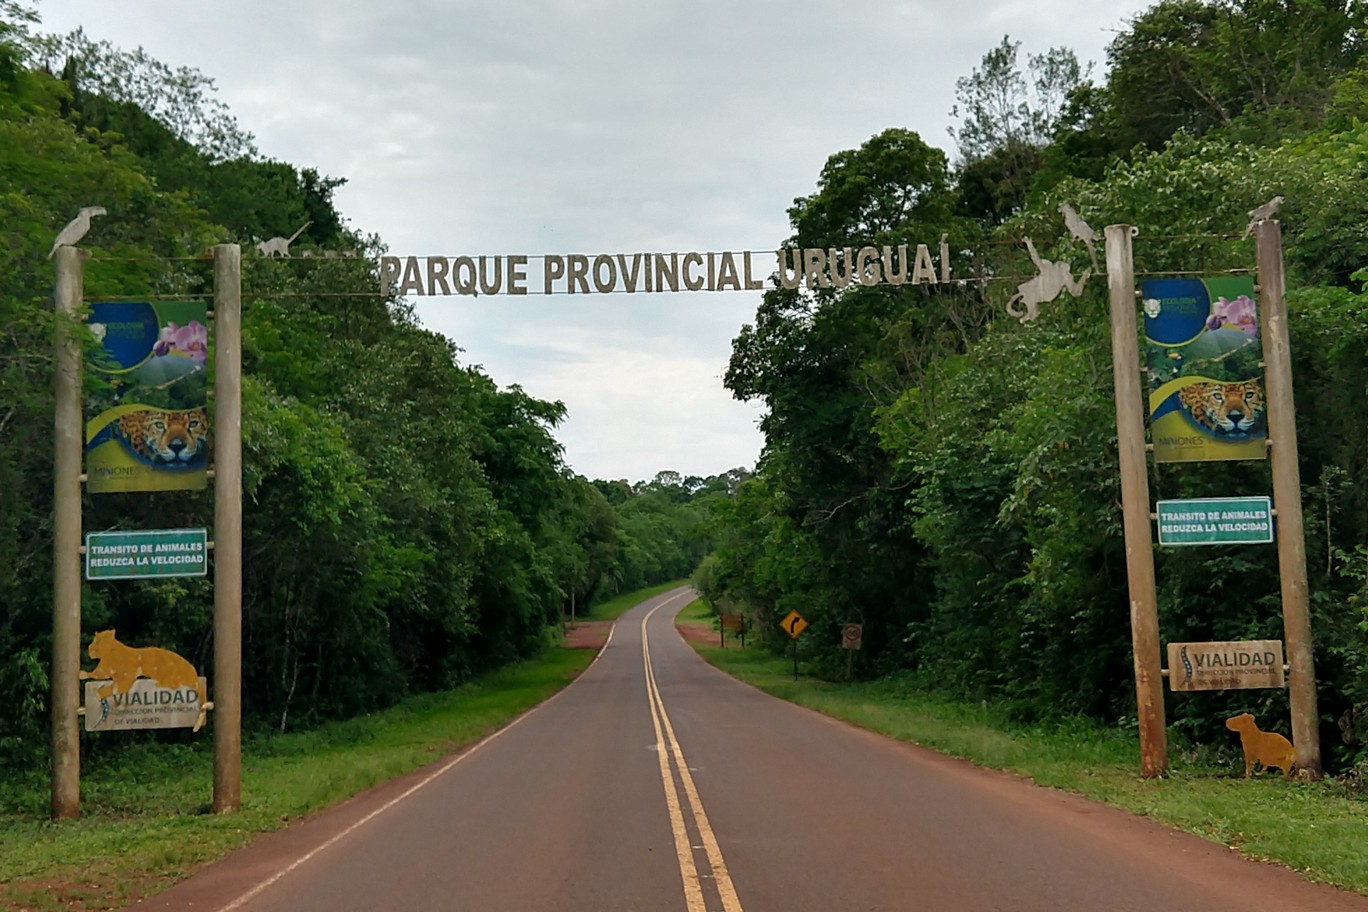 Parque Provincial Urugua-i, ARG